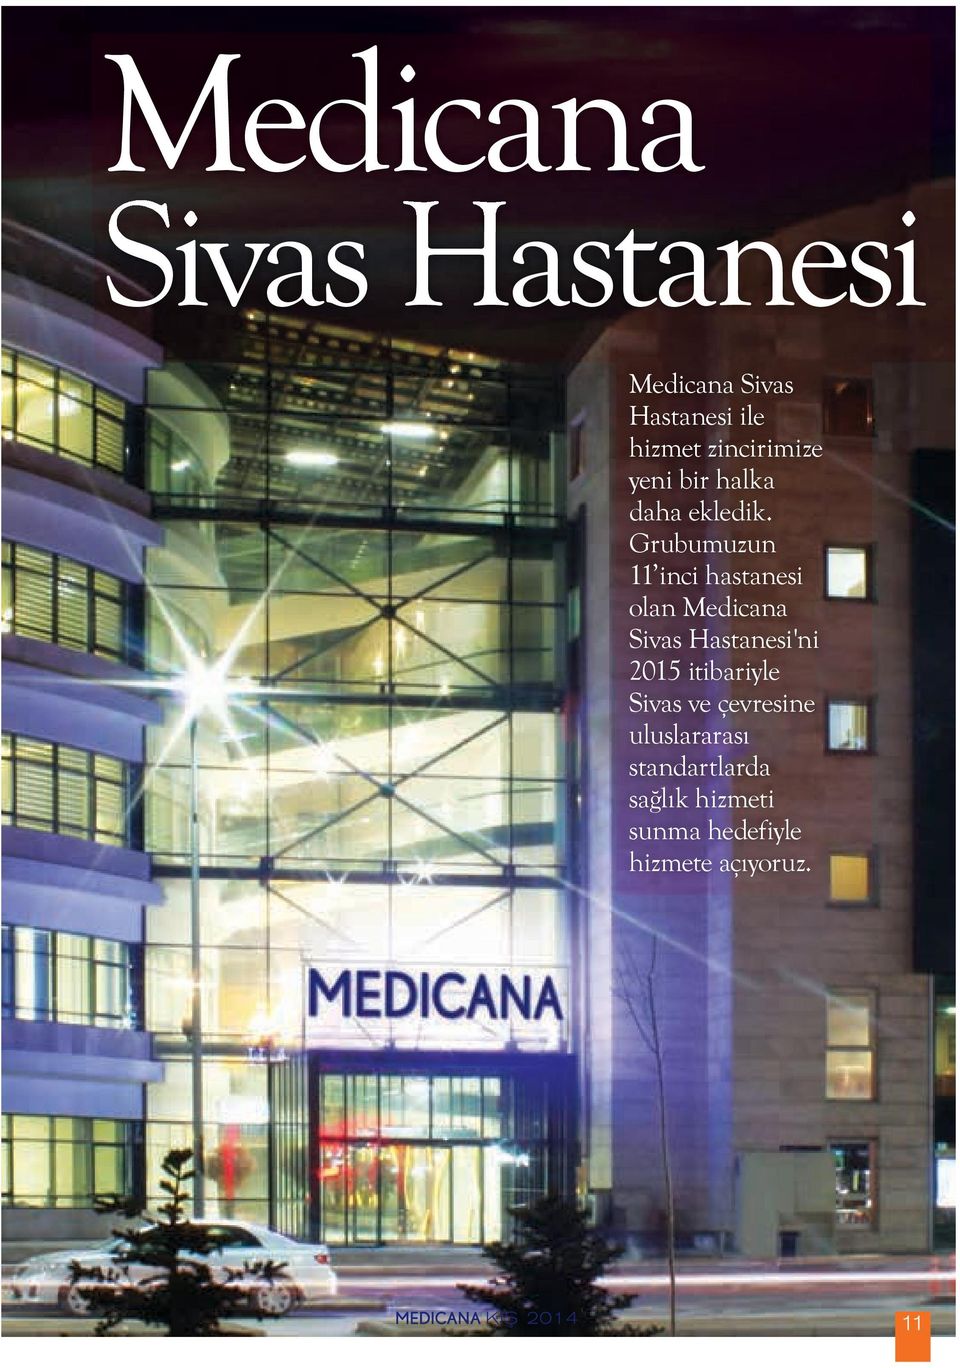 Grubumuzun 11 inci hastanesi olan Medicana Sivas Hastanesi'ni 2015